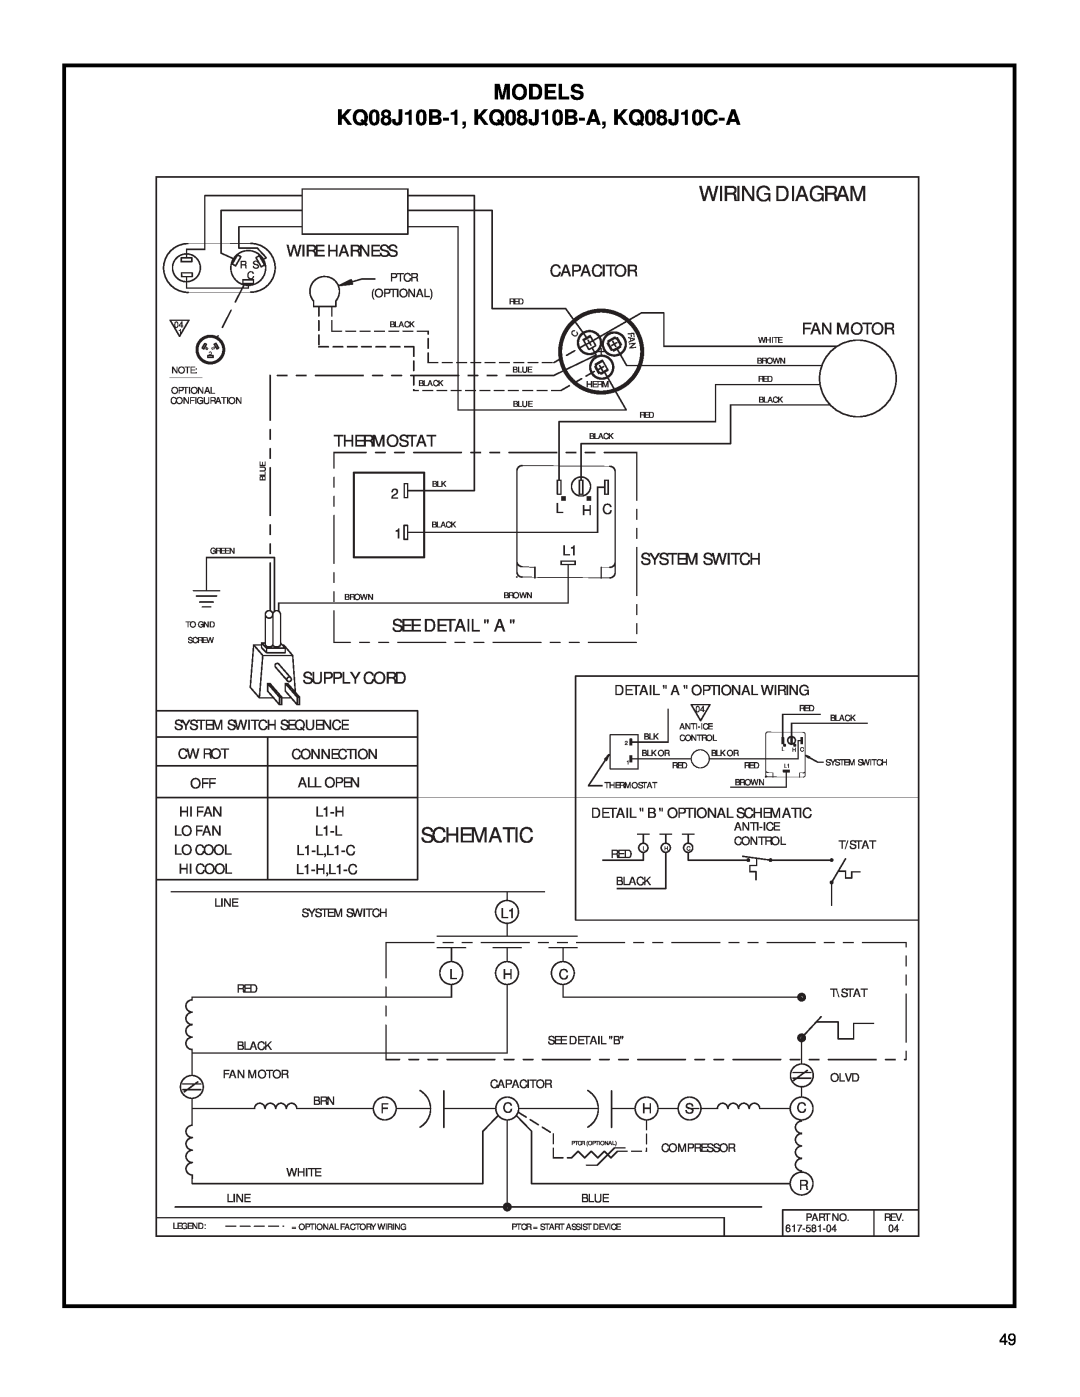 Friedrich racservmn KQ08J10B-1, KQ08J10B-A, KQ08J10C-A, Wiring Diagram, Models, Schematic, See Detail A, Fan Motor 